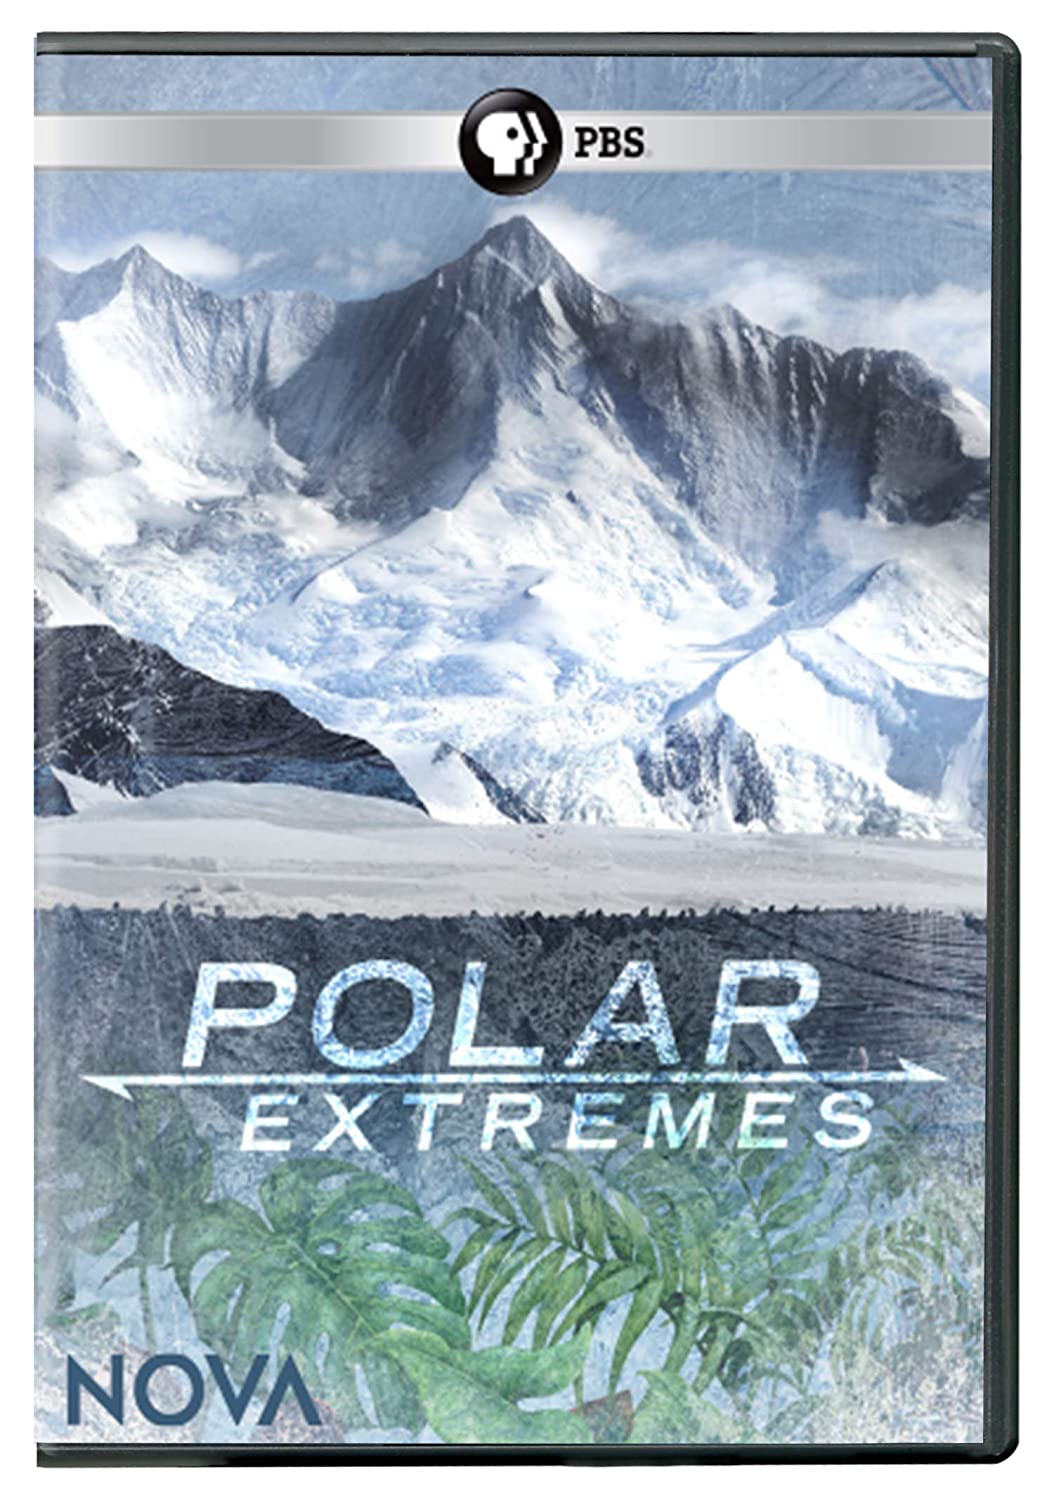 NOVA-Polar Extremen GG NLSUBBED WEB x264-DDF